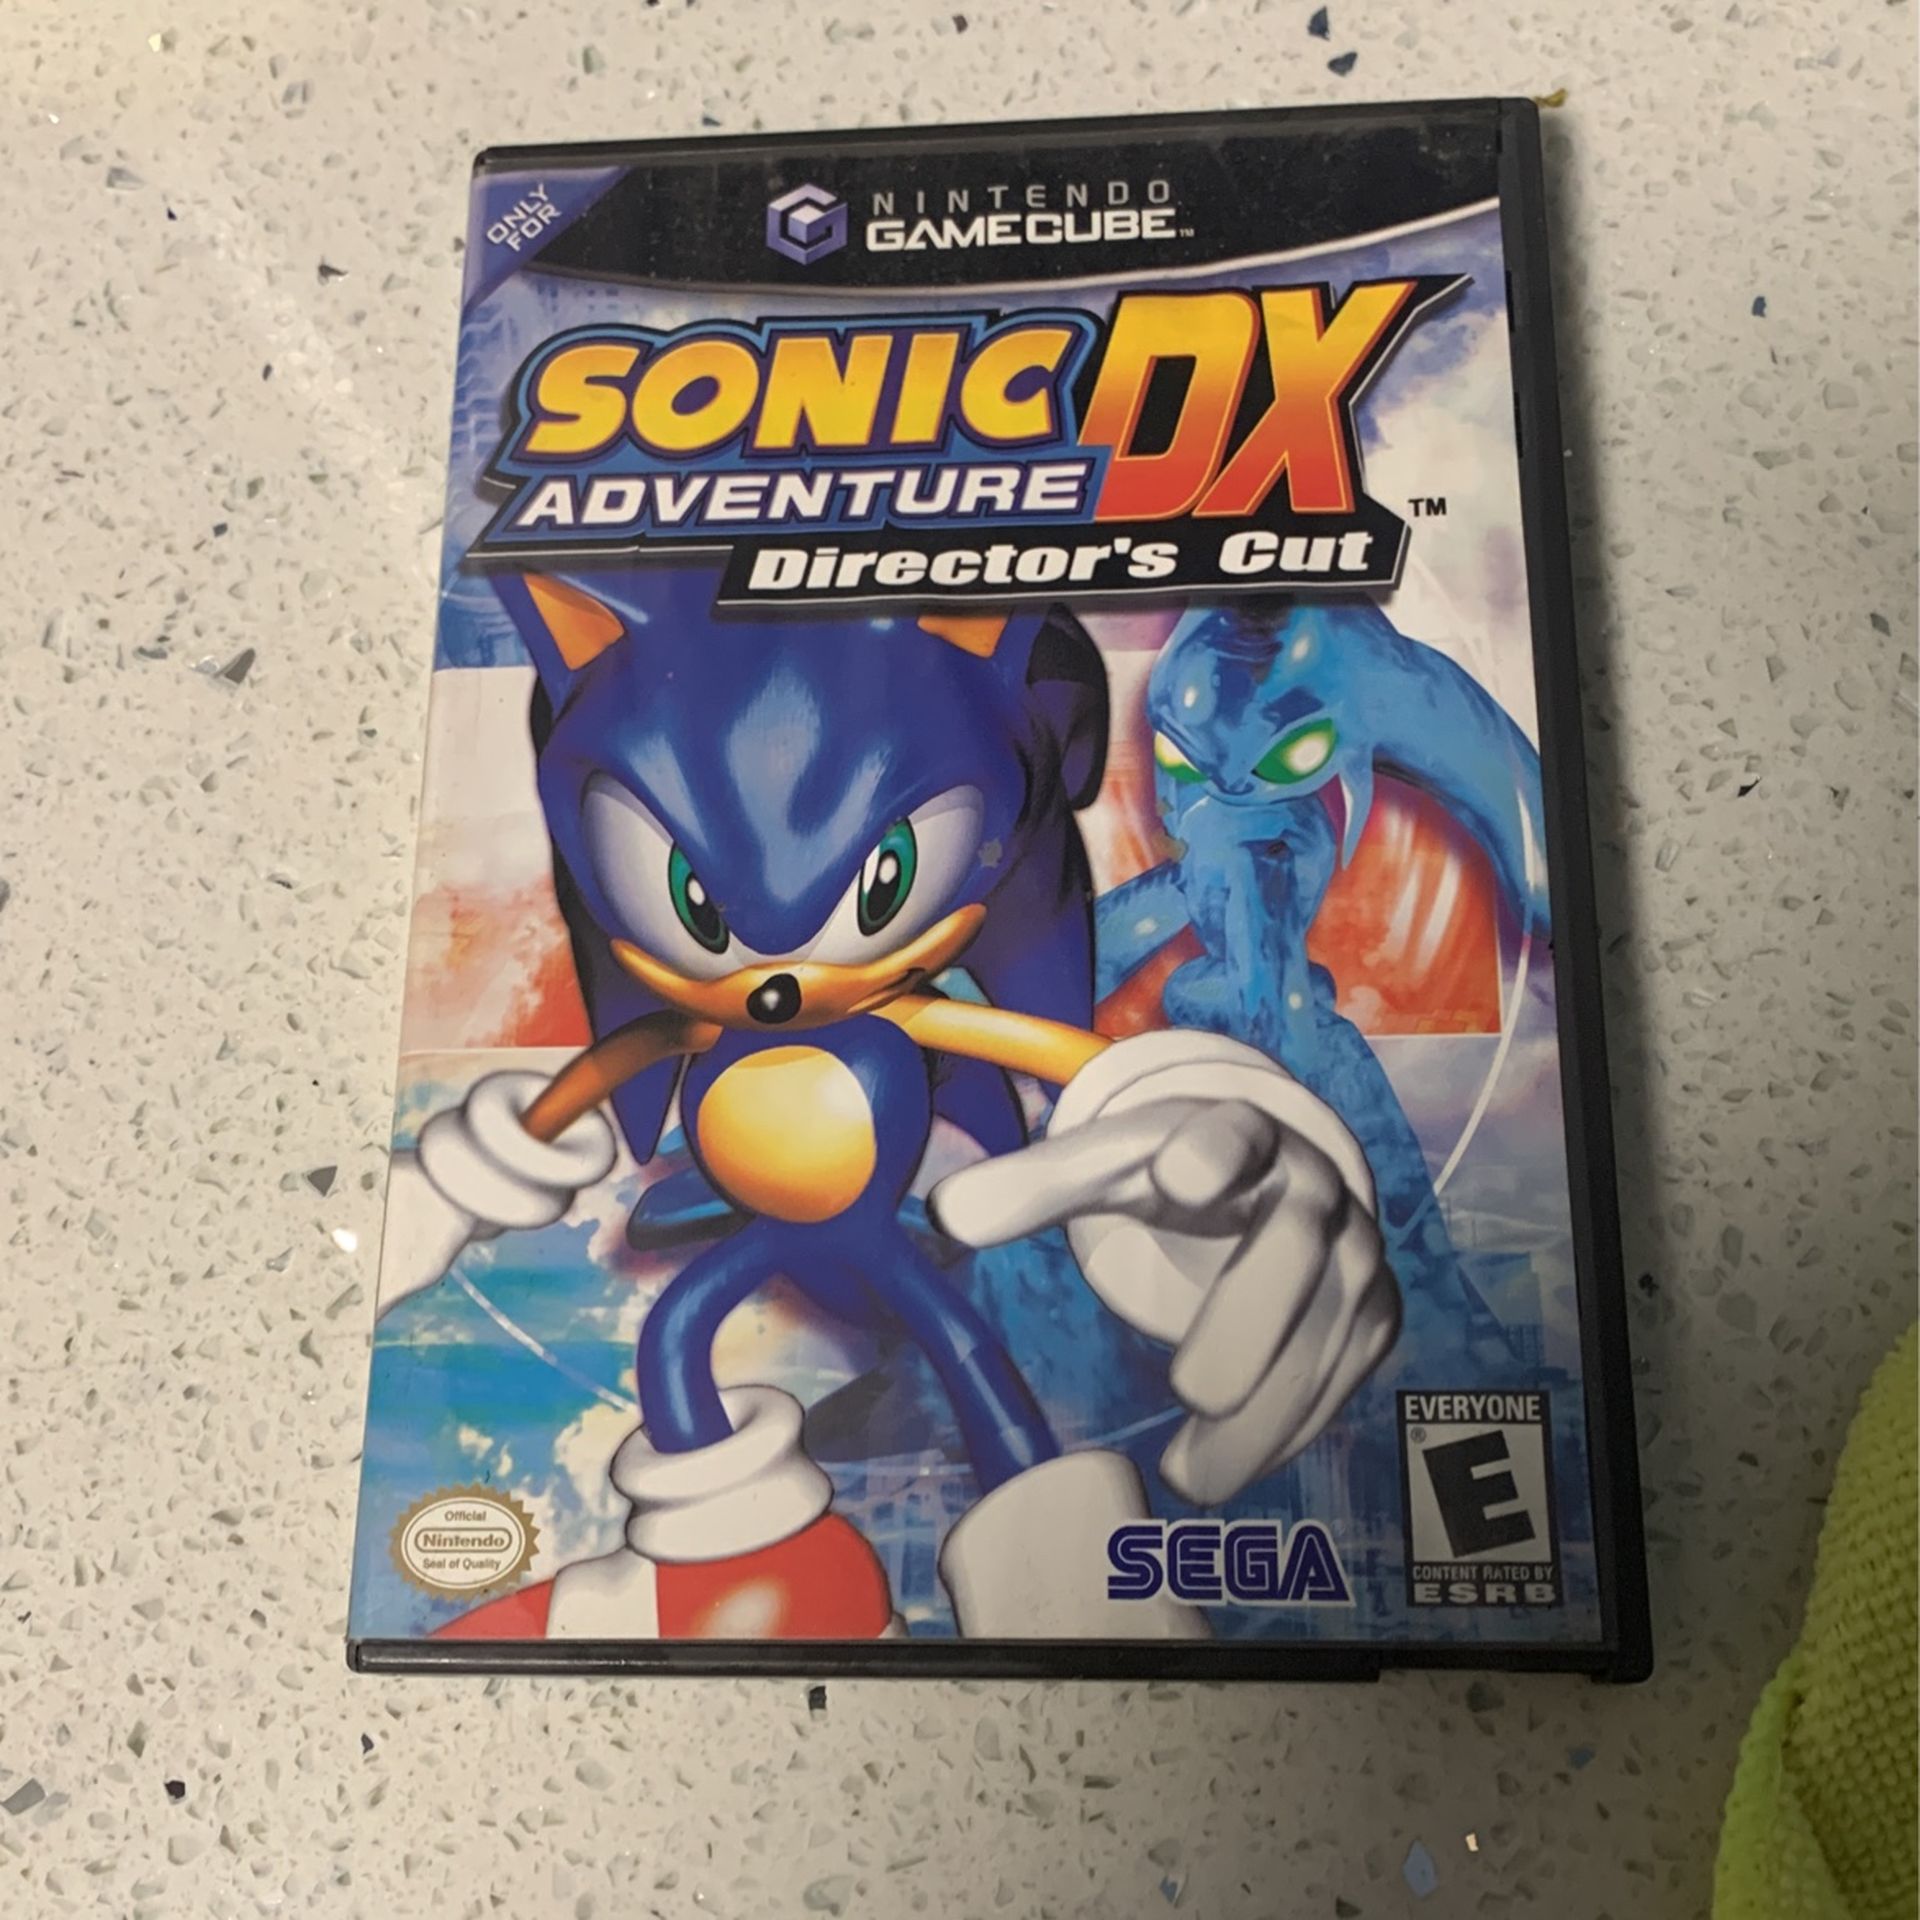 Sonic Adventure DX: Director’s Cut